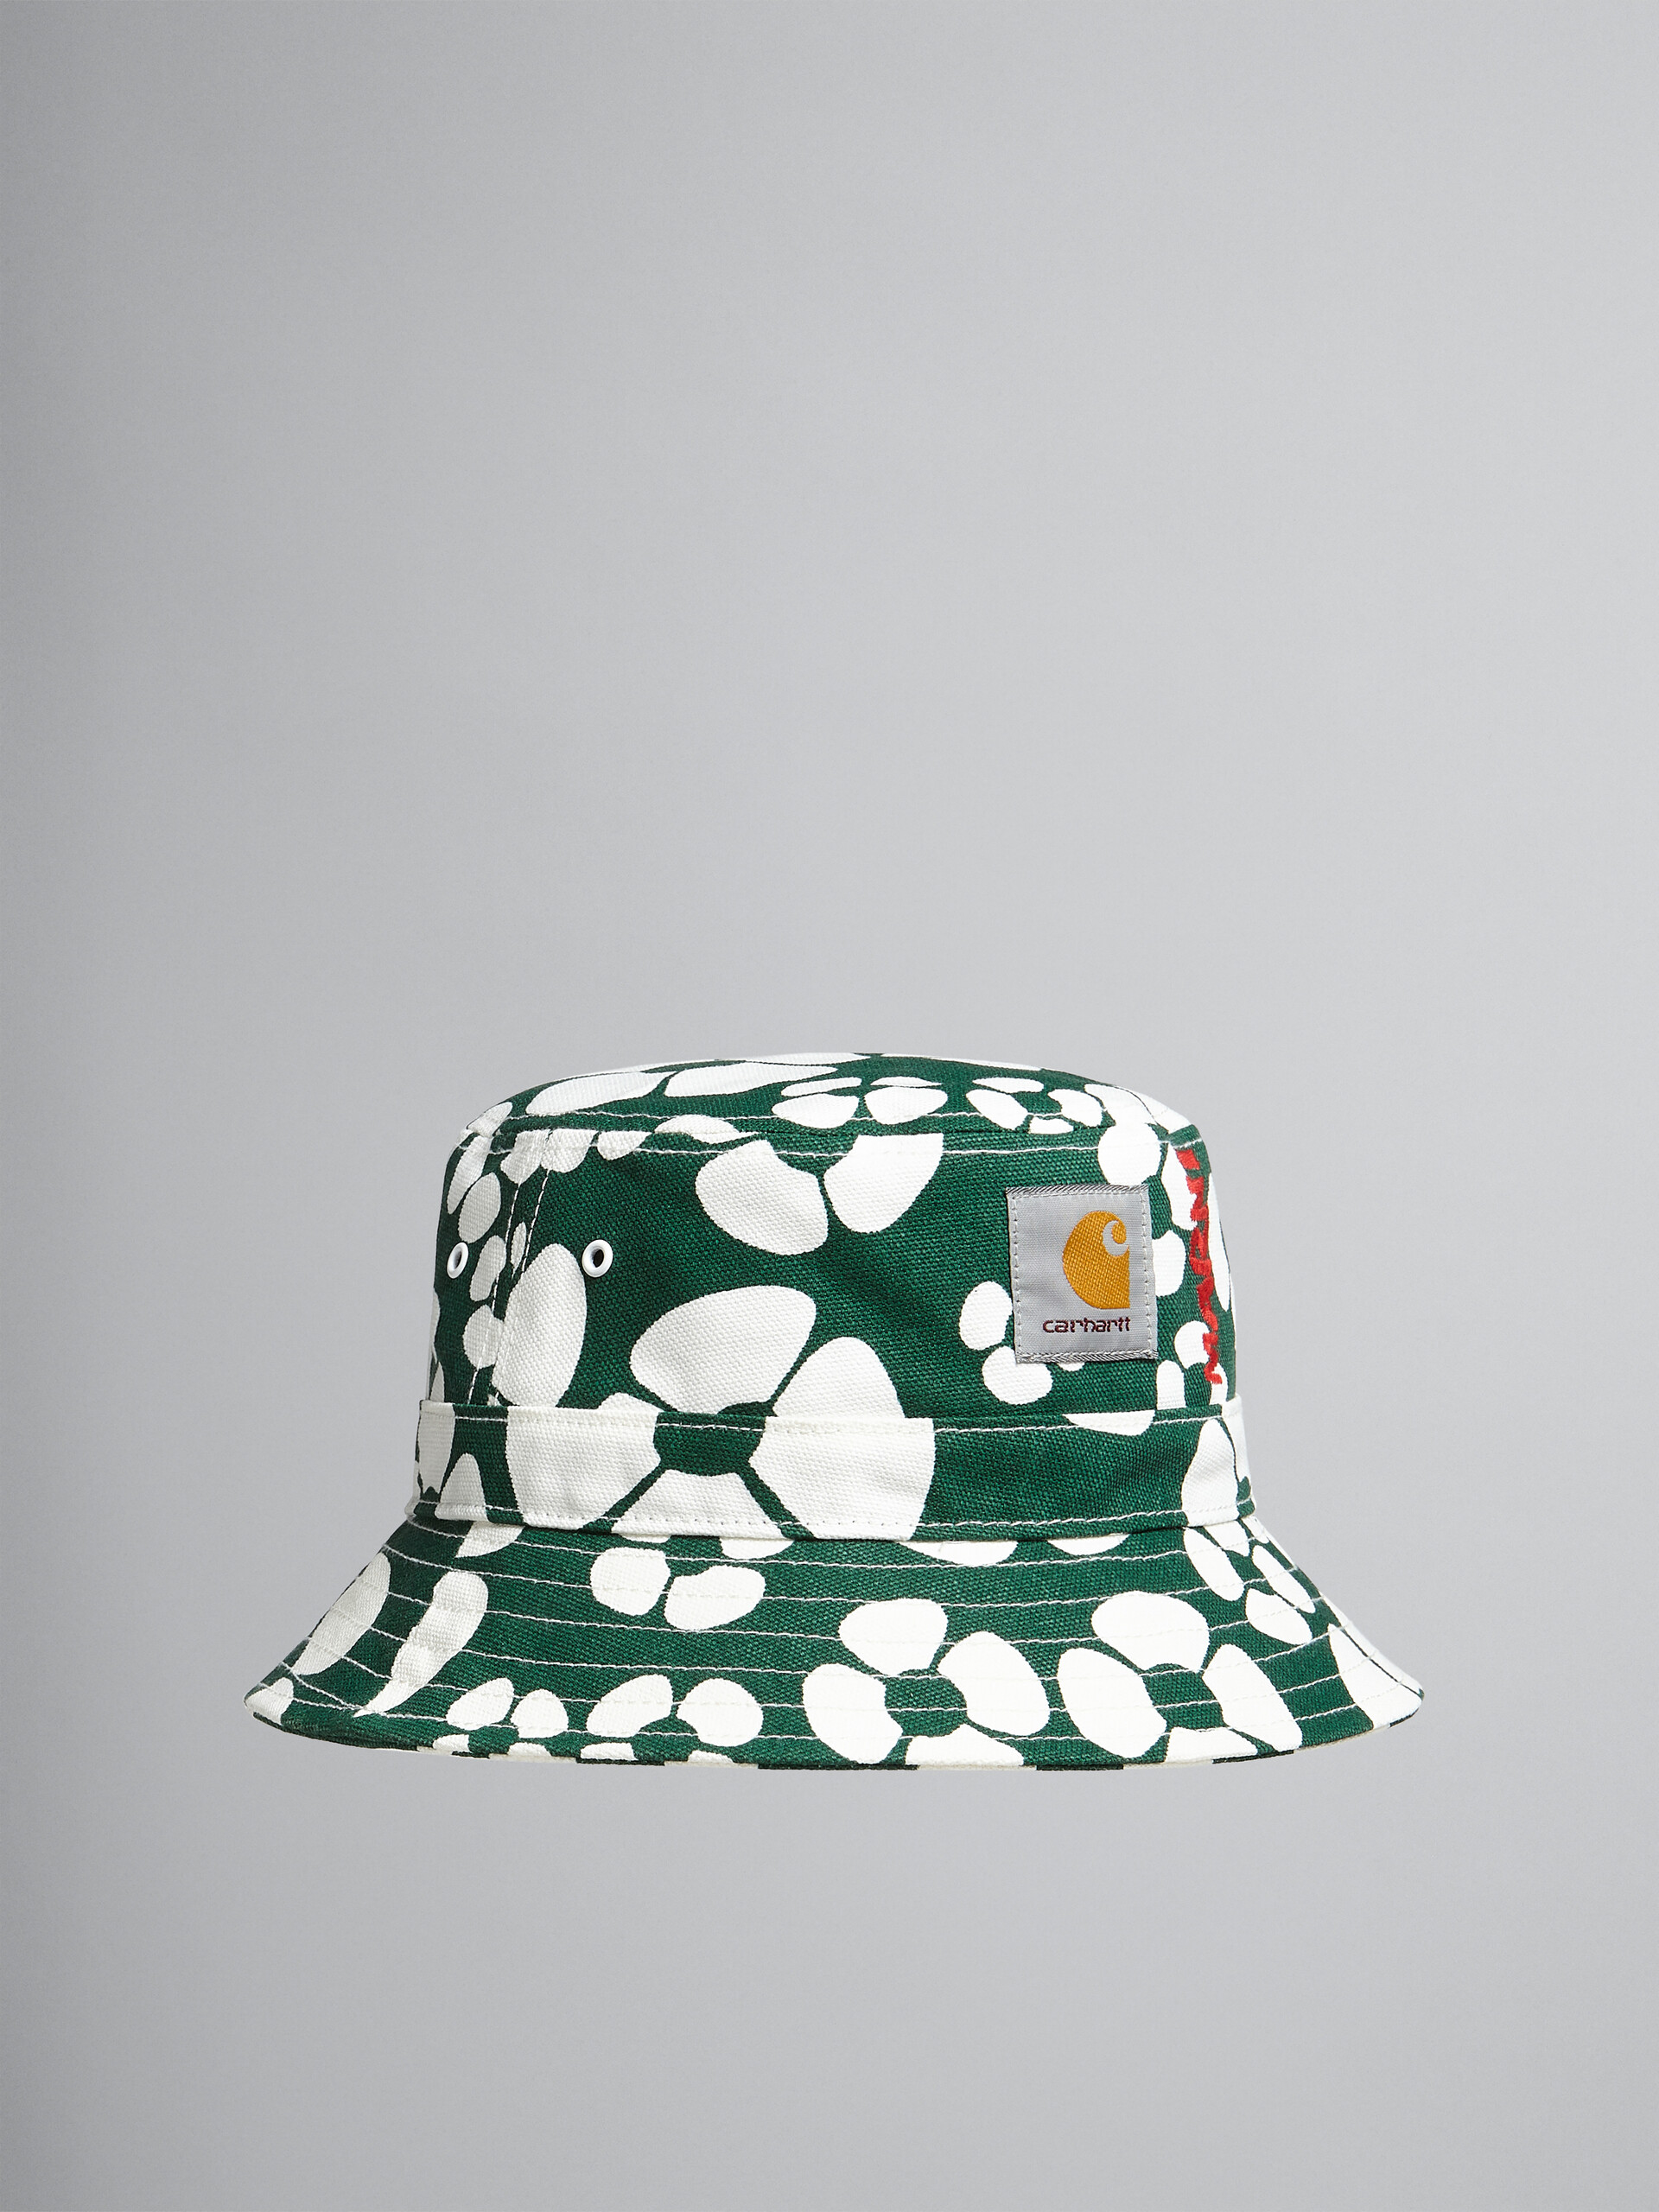 MARNI x CARHARTT WIP - Cappello bucket verde - Cappelli - Image 1